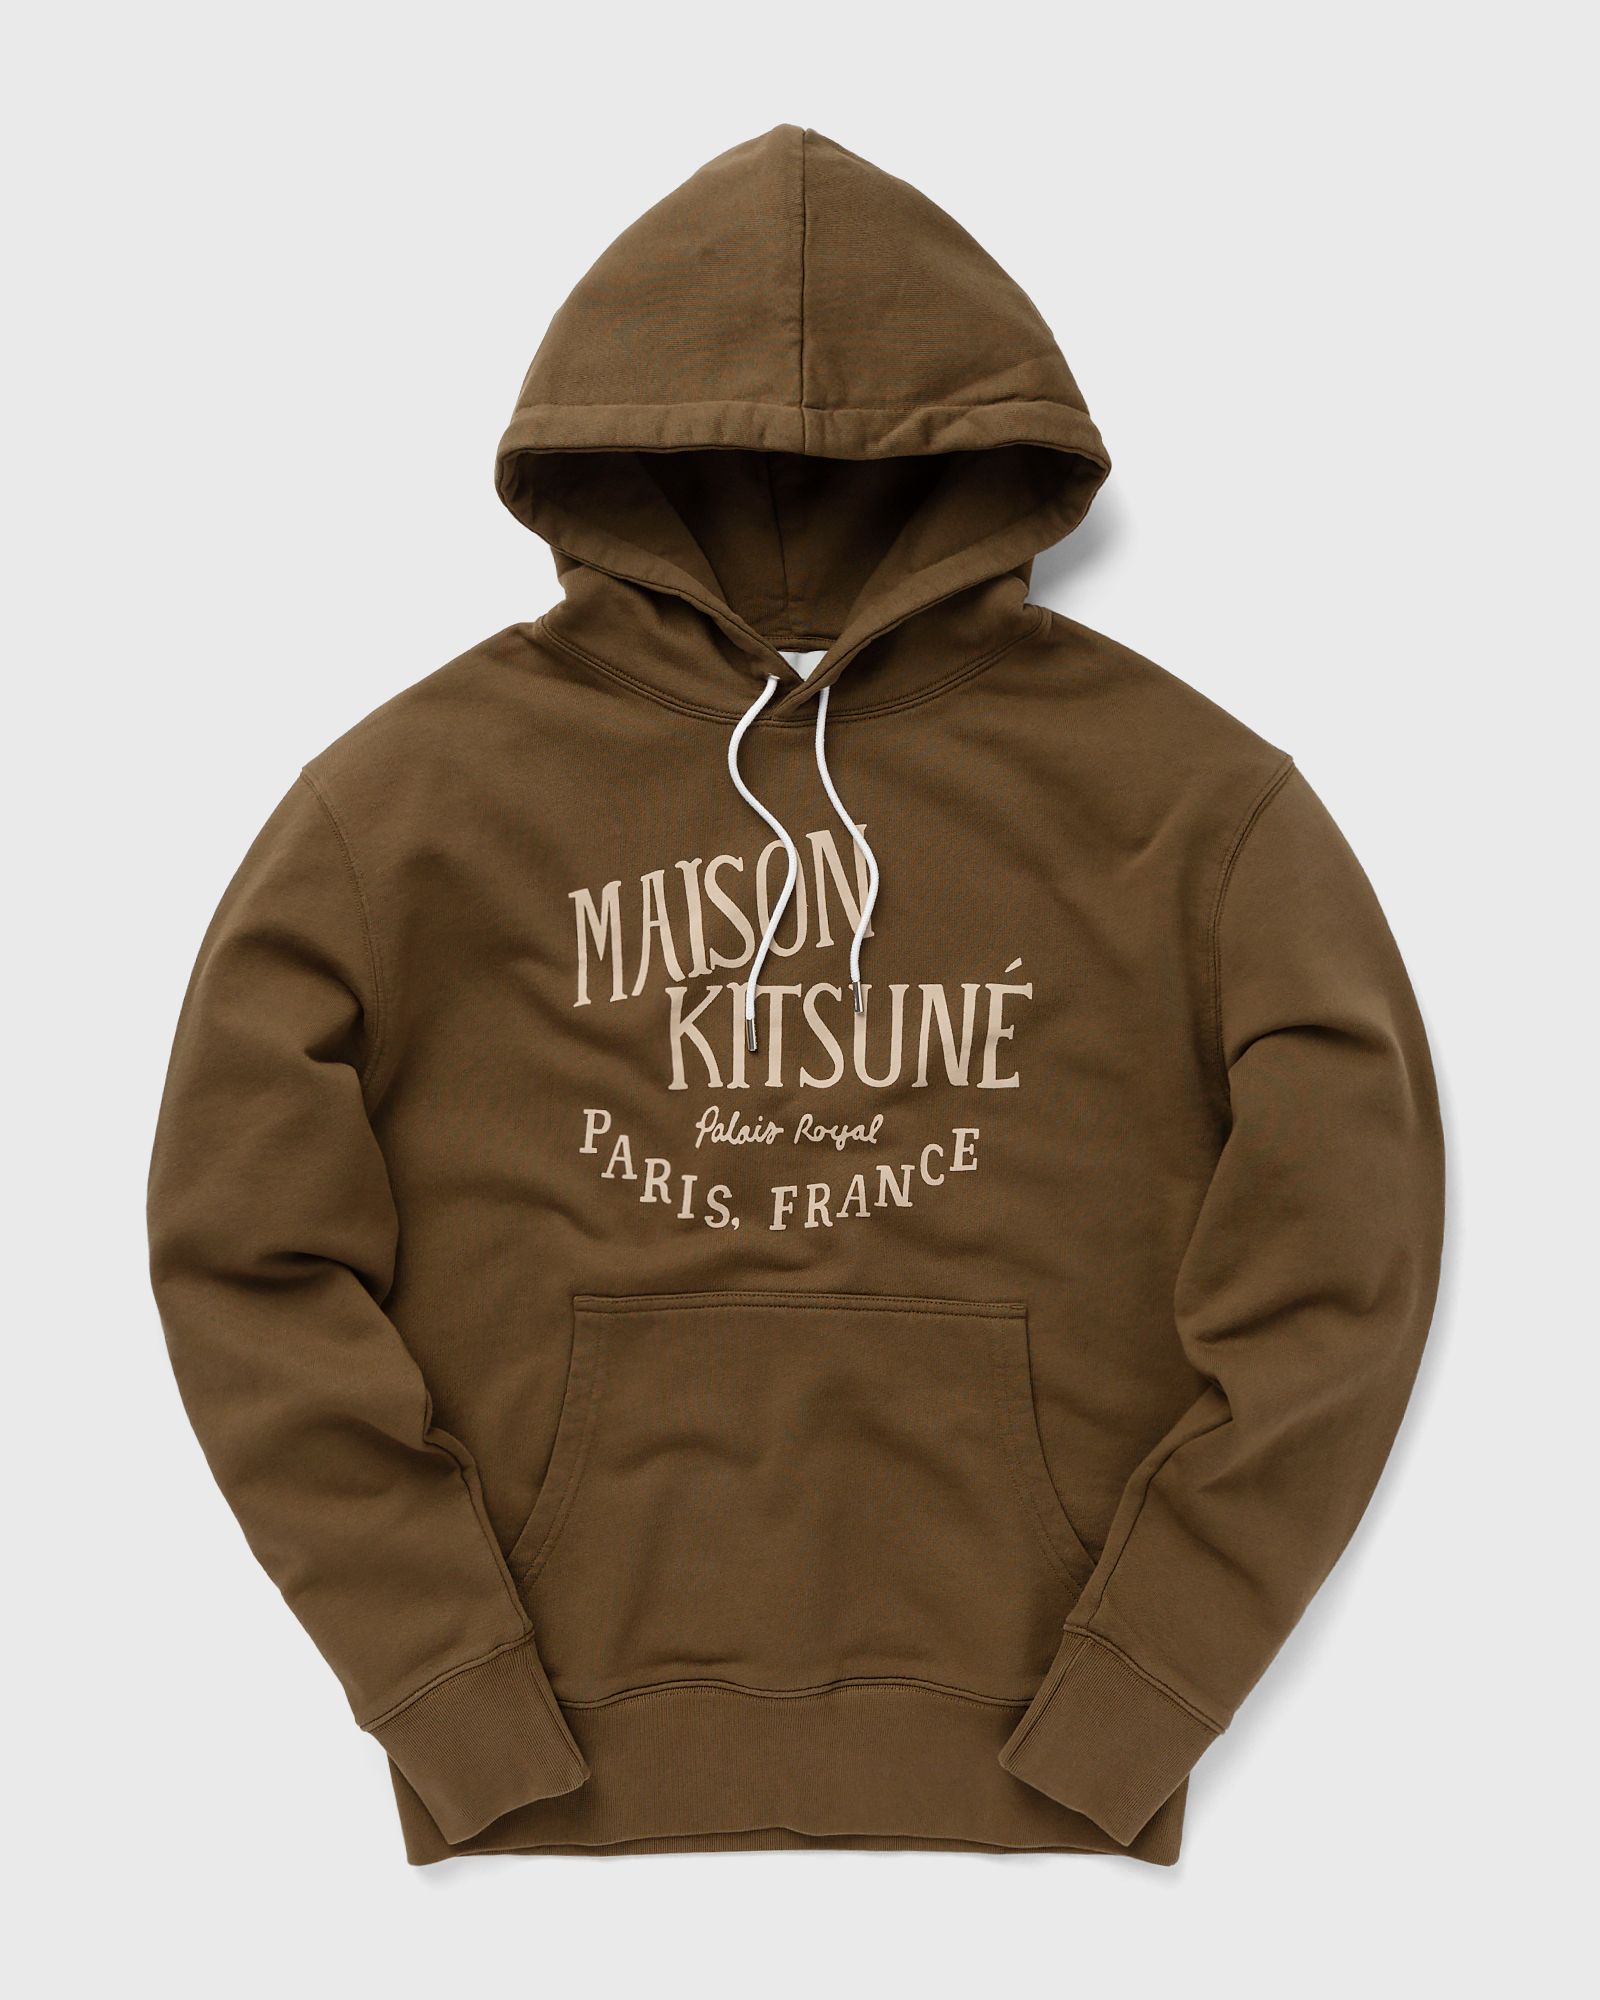 Maison Kitsune - palais royal classic hoodie men hoodies green in größe:xl